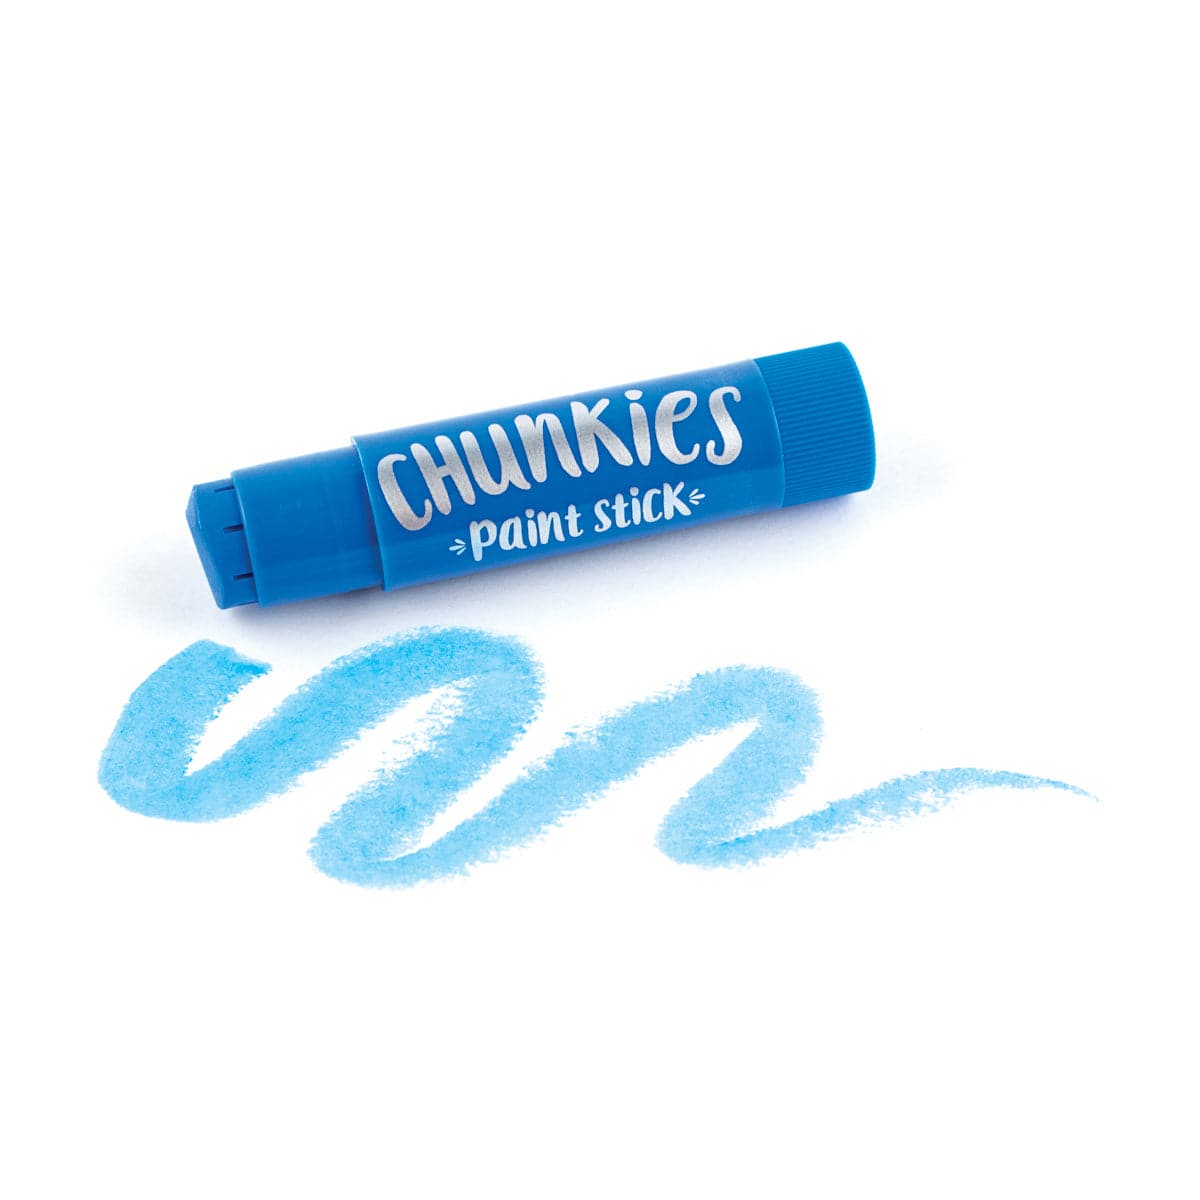 Ooly-Chunkies Paint Sticks - Set of 12-126-004-Legacy Toys